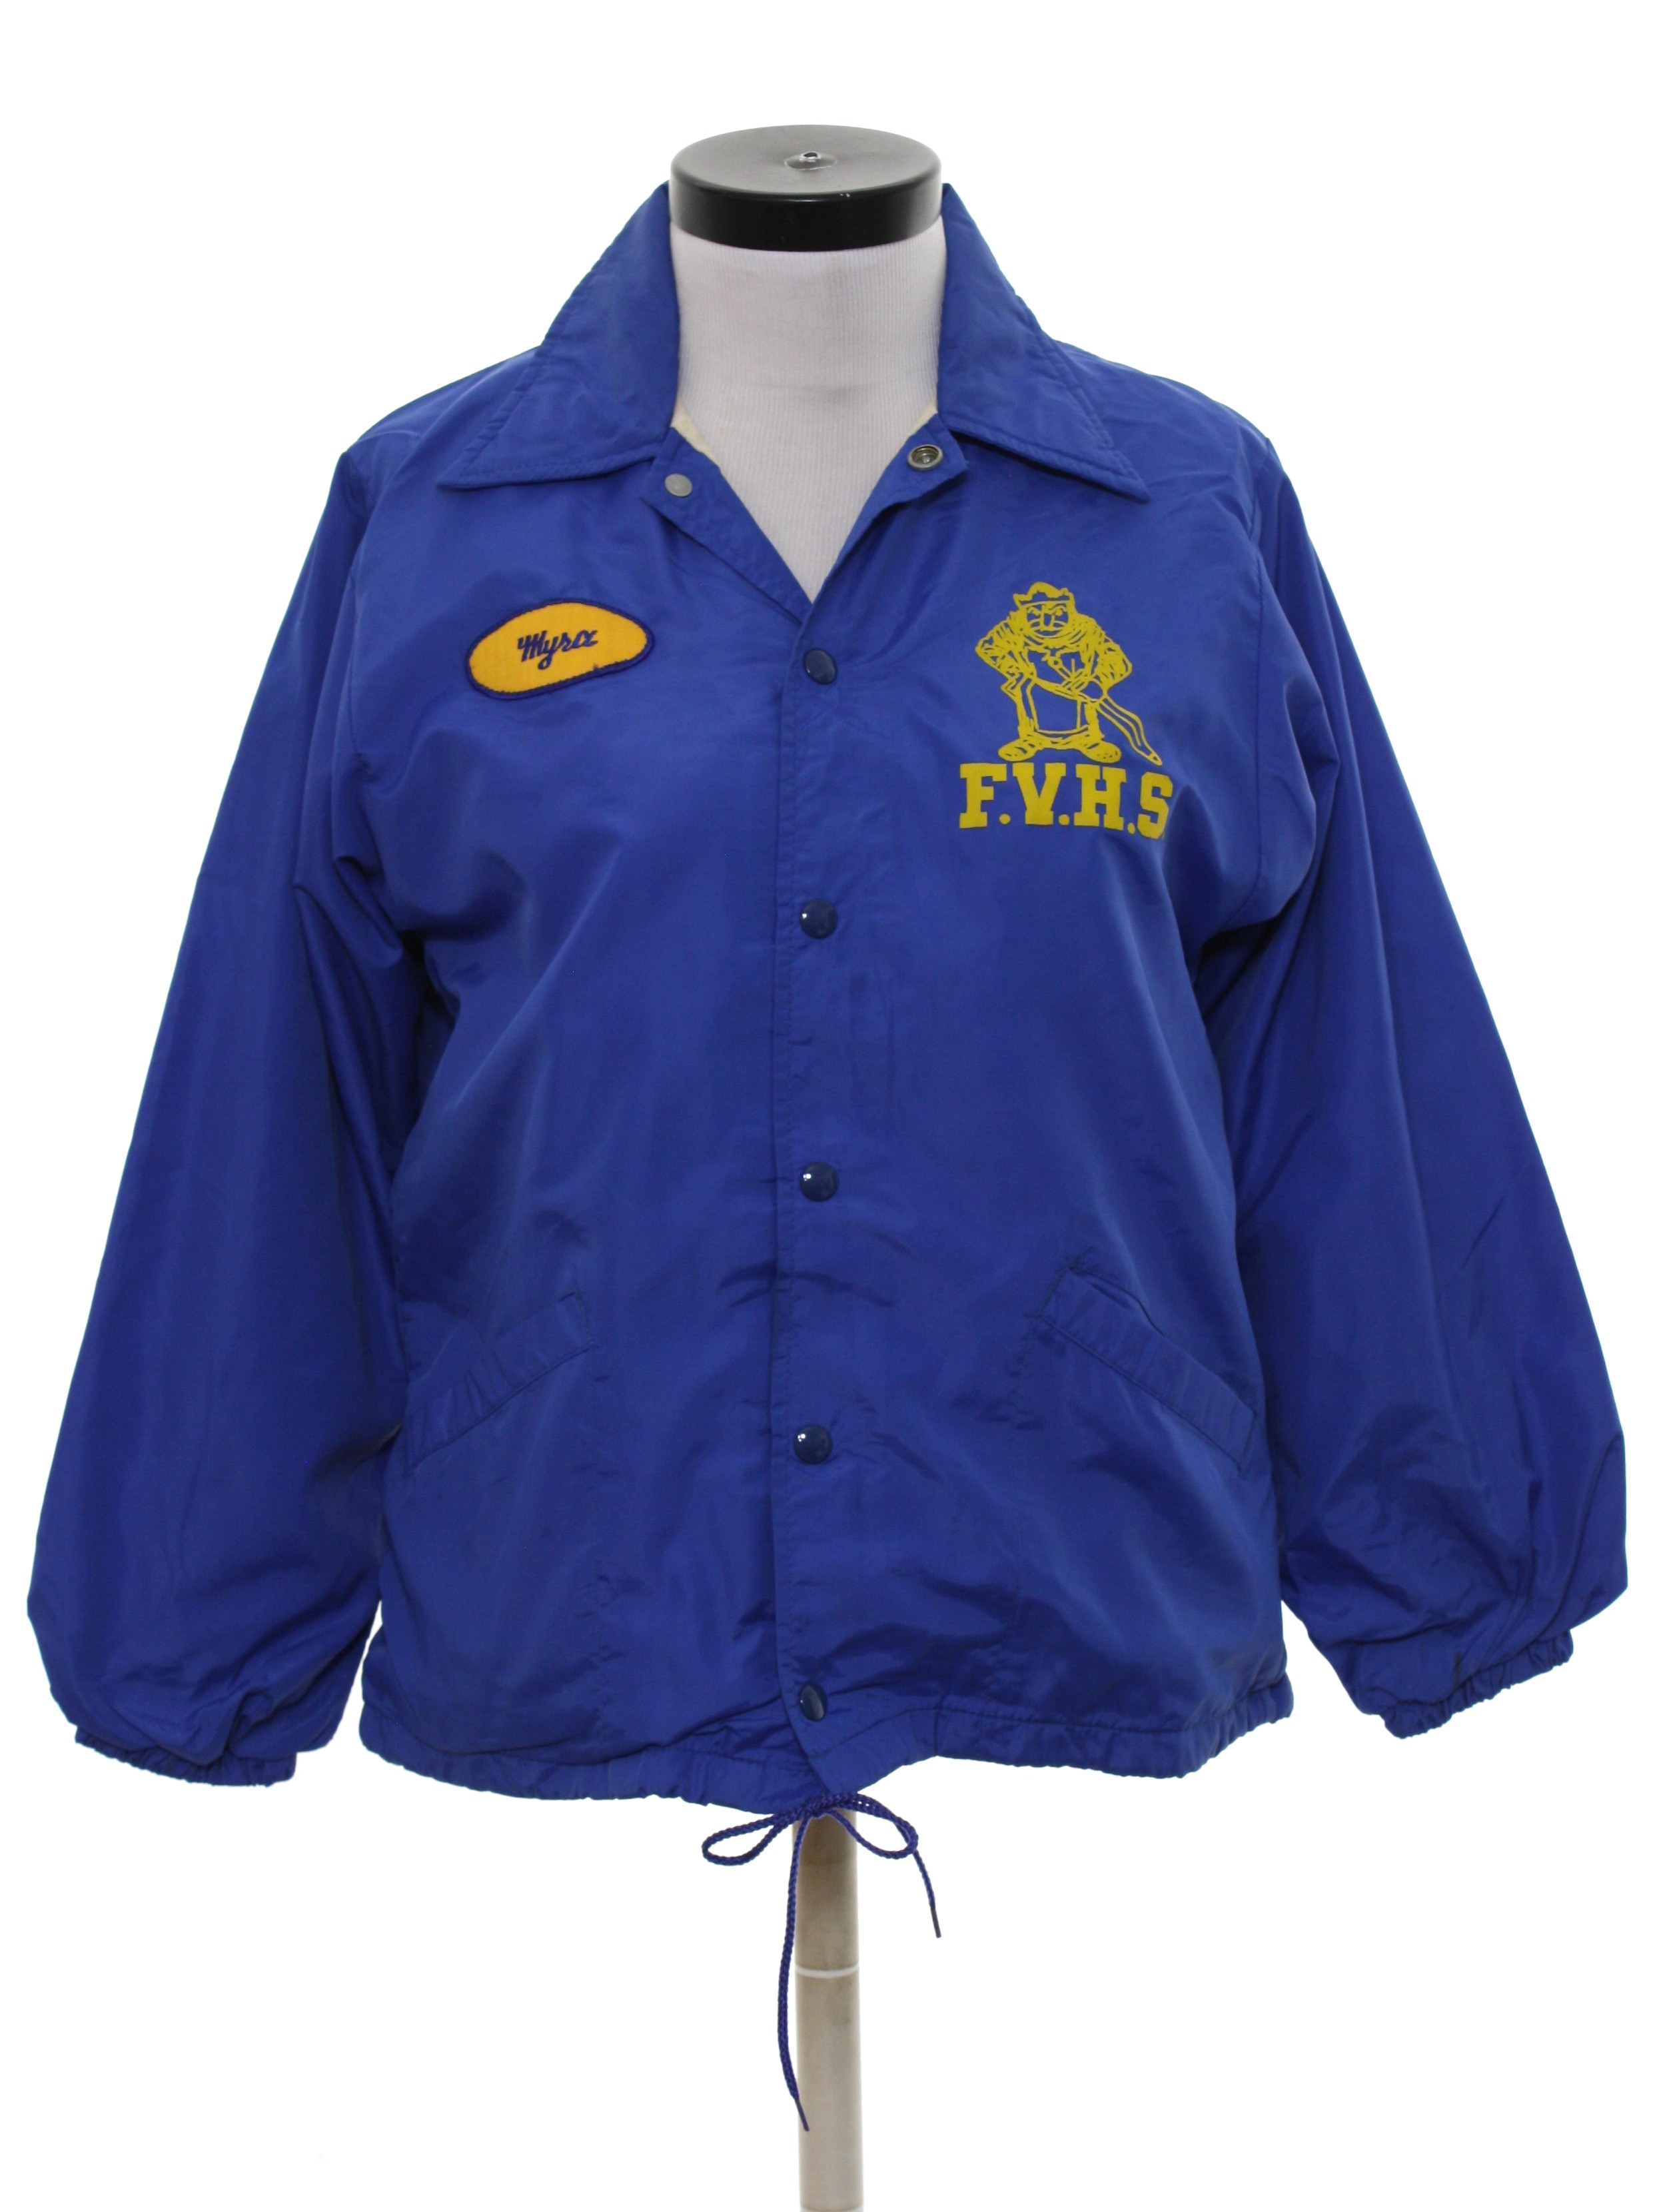 Retro 1980's Jacket (Swingster) : 80s -Swingster- Womens royal blue ...